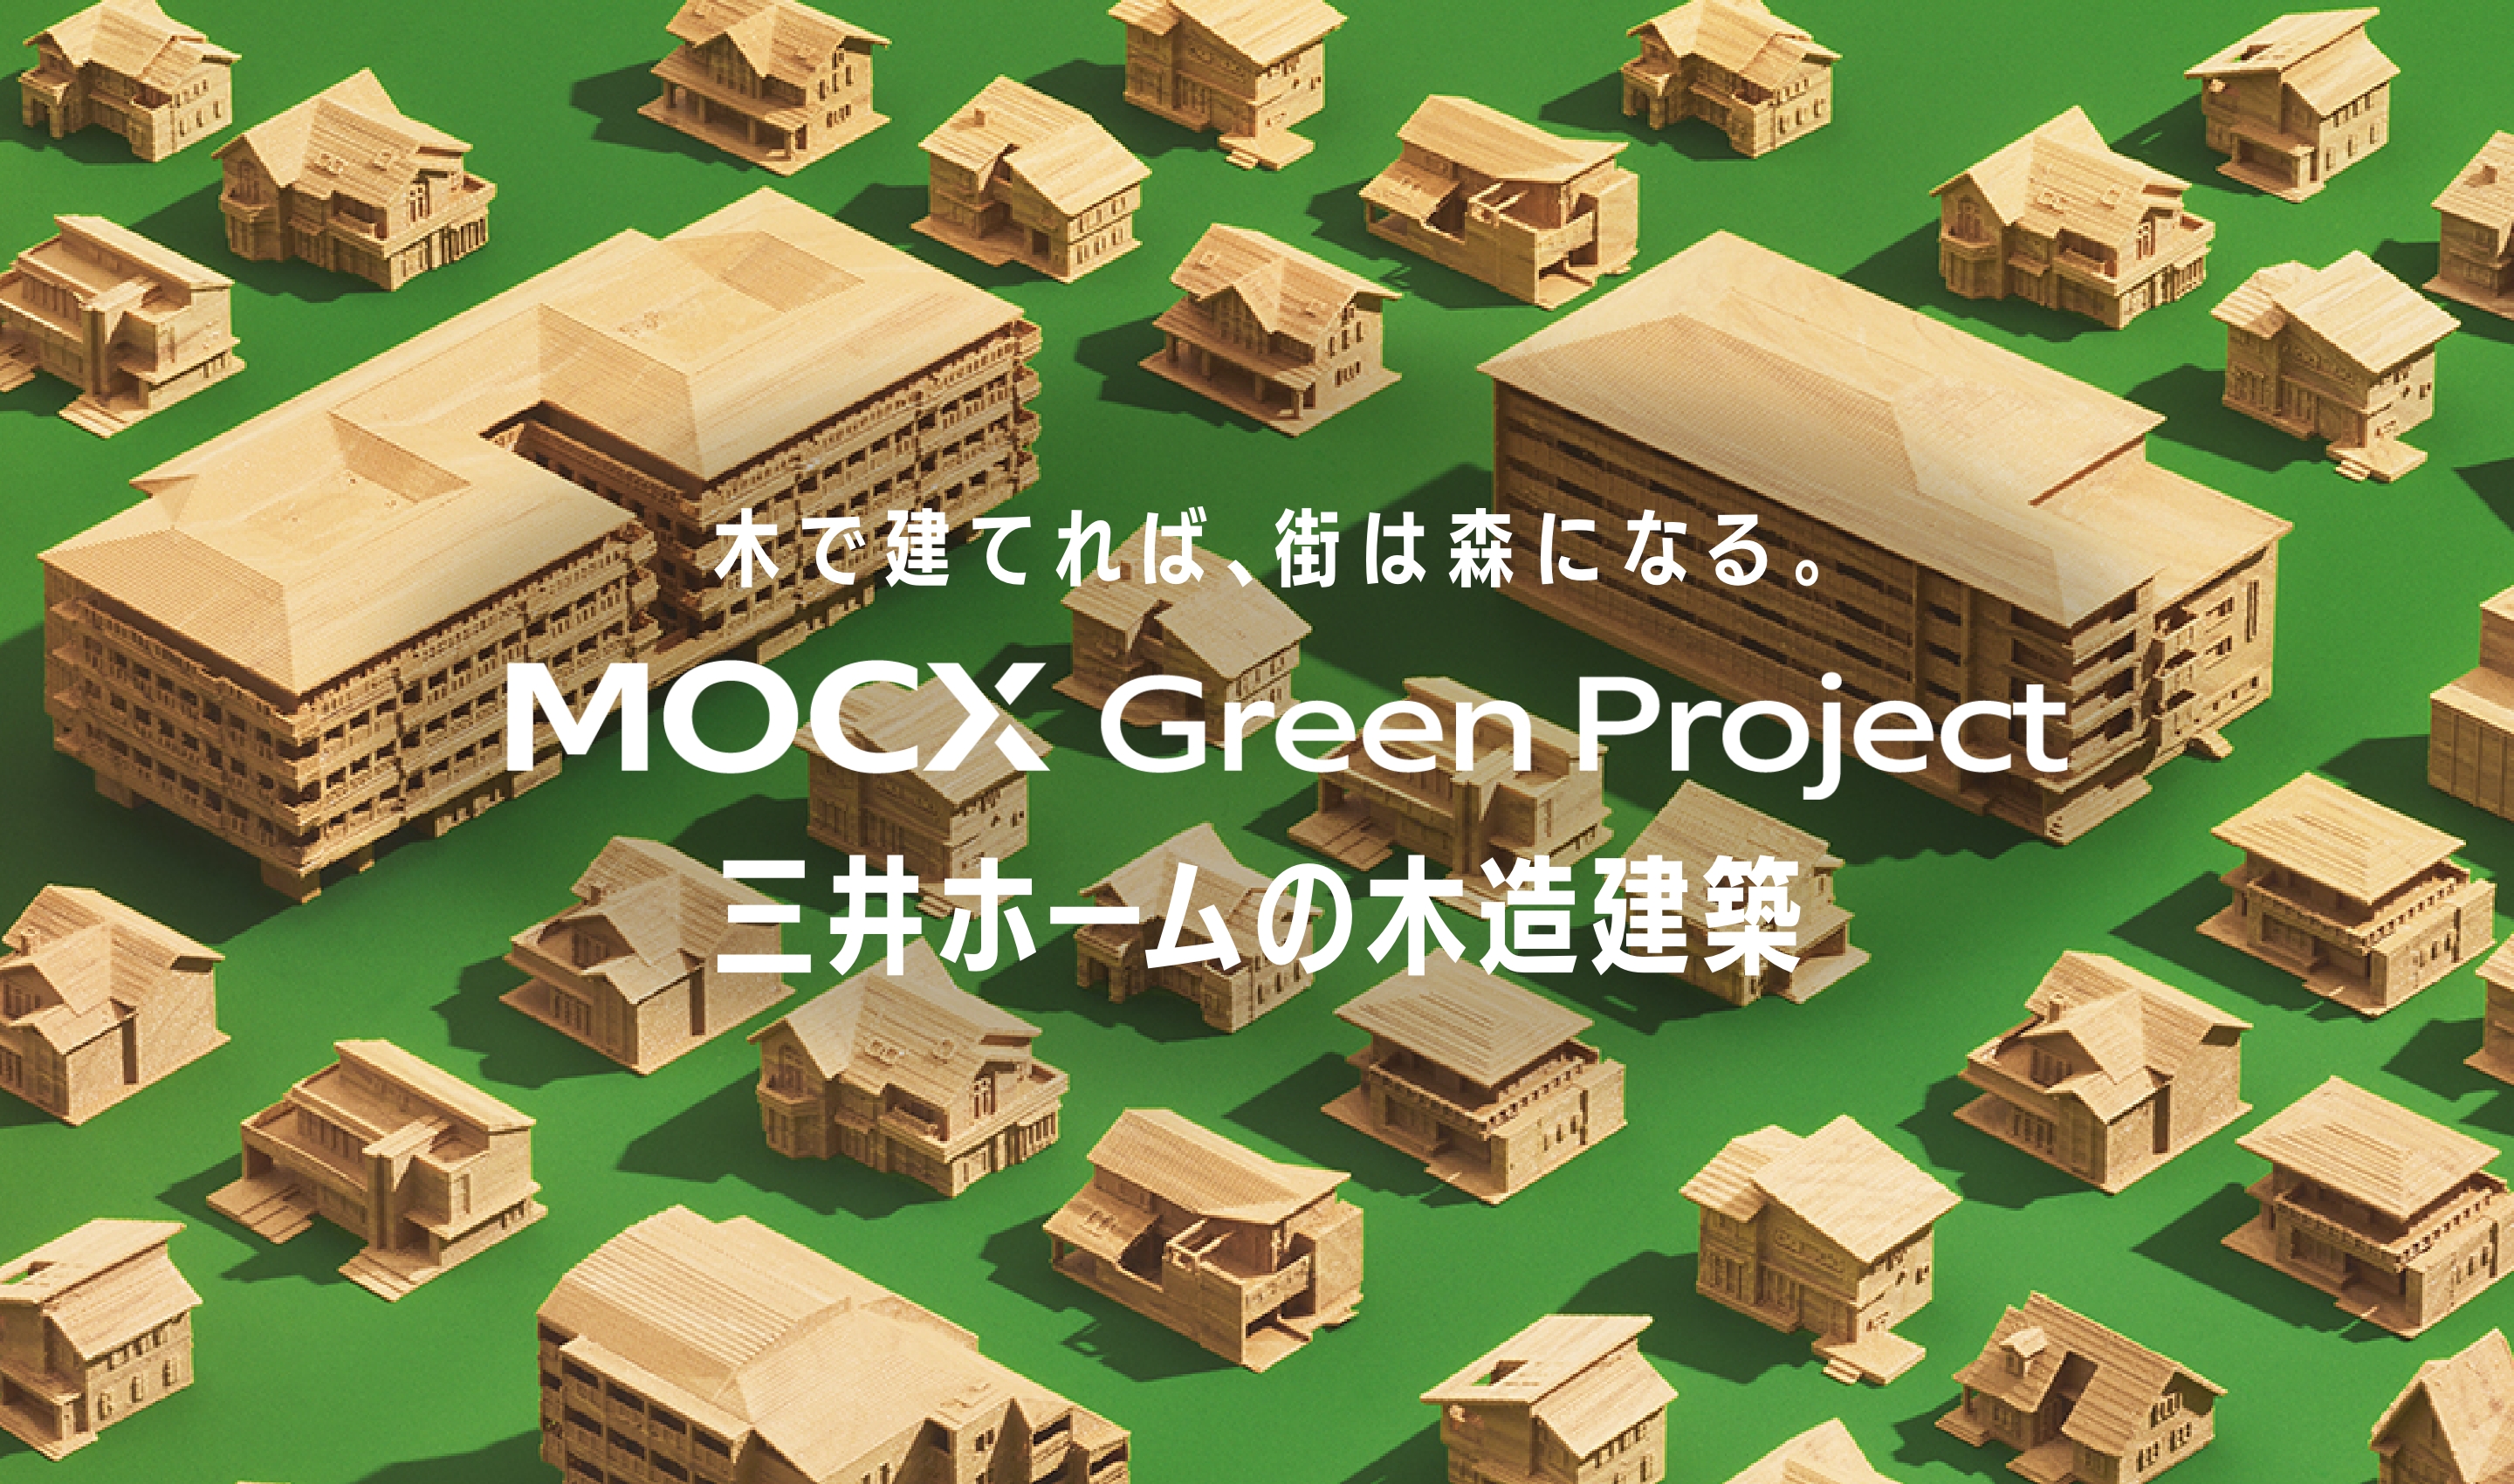 MOCX(モクス) GREEN PROJECT